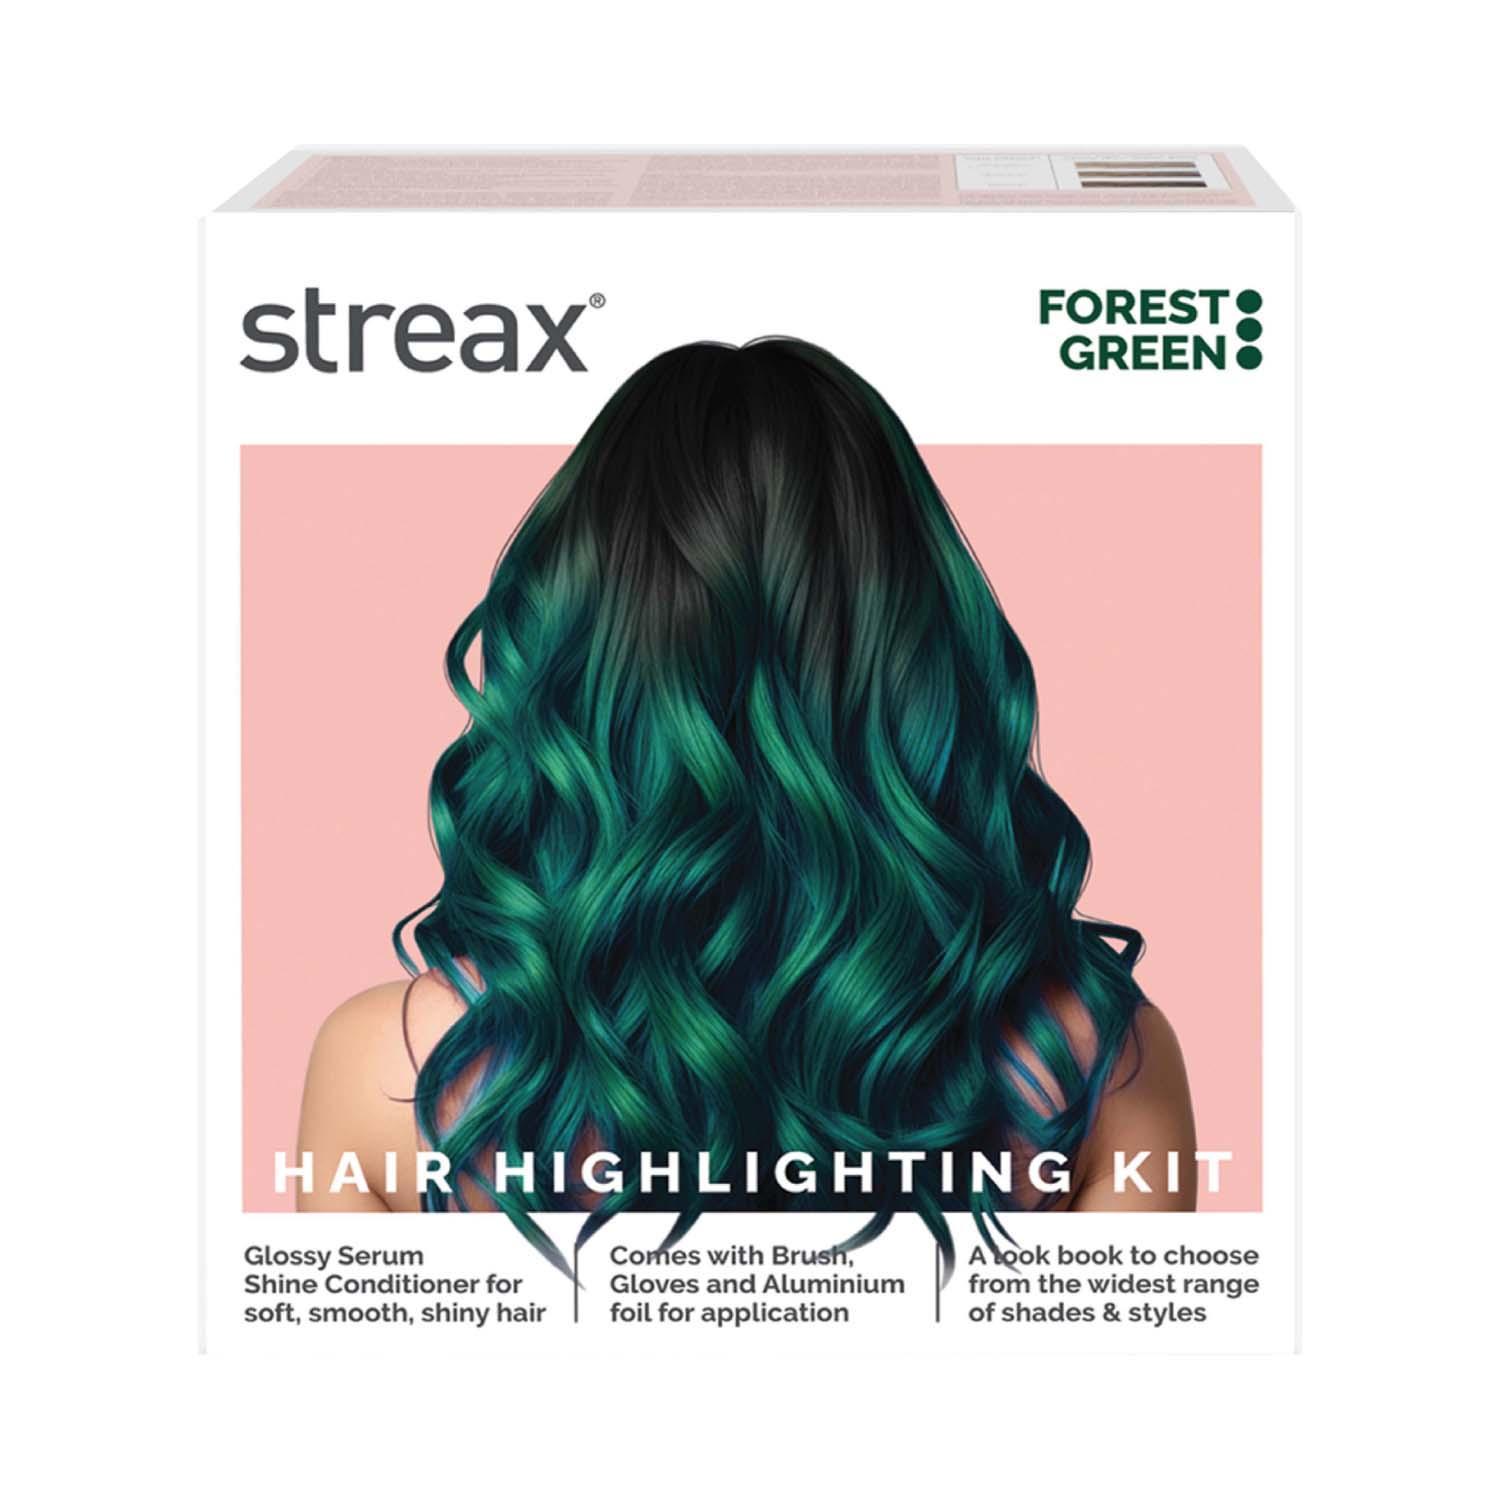 streax ultralights hair color highlight kit - forest green (180 g)